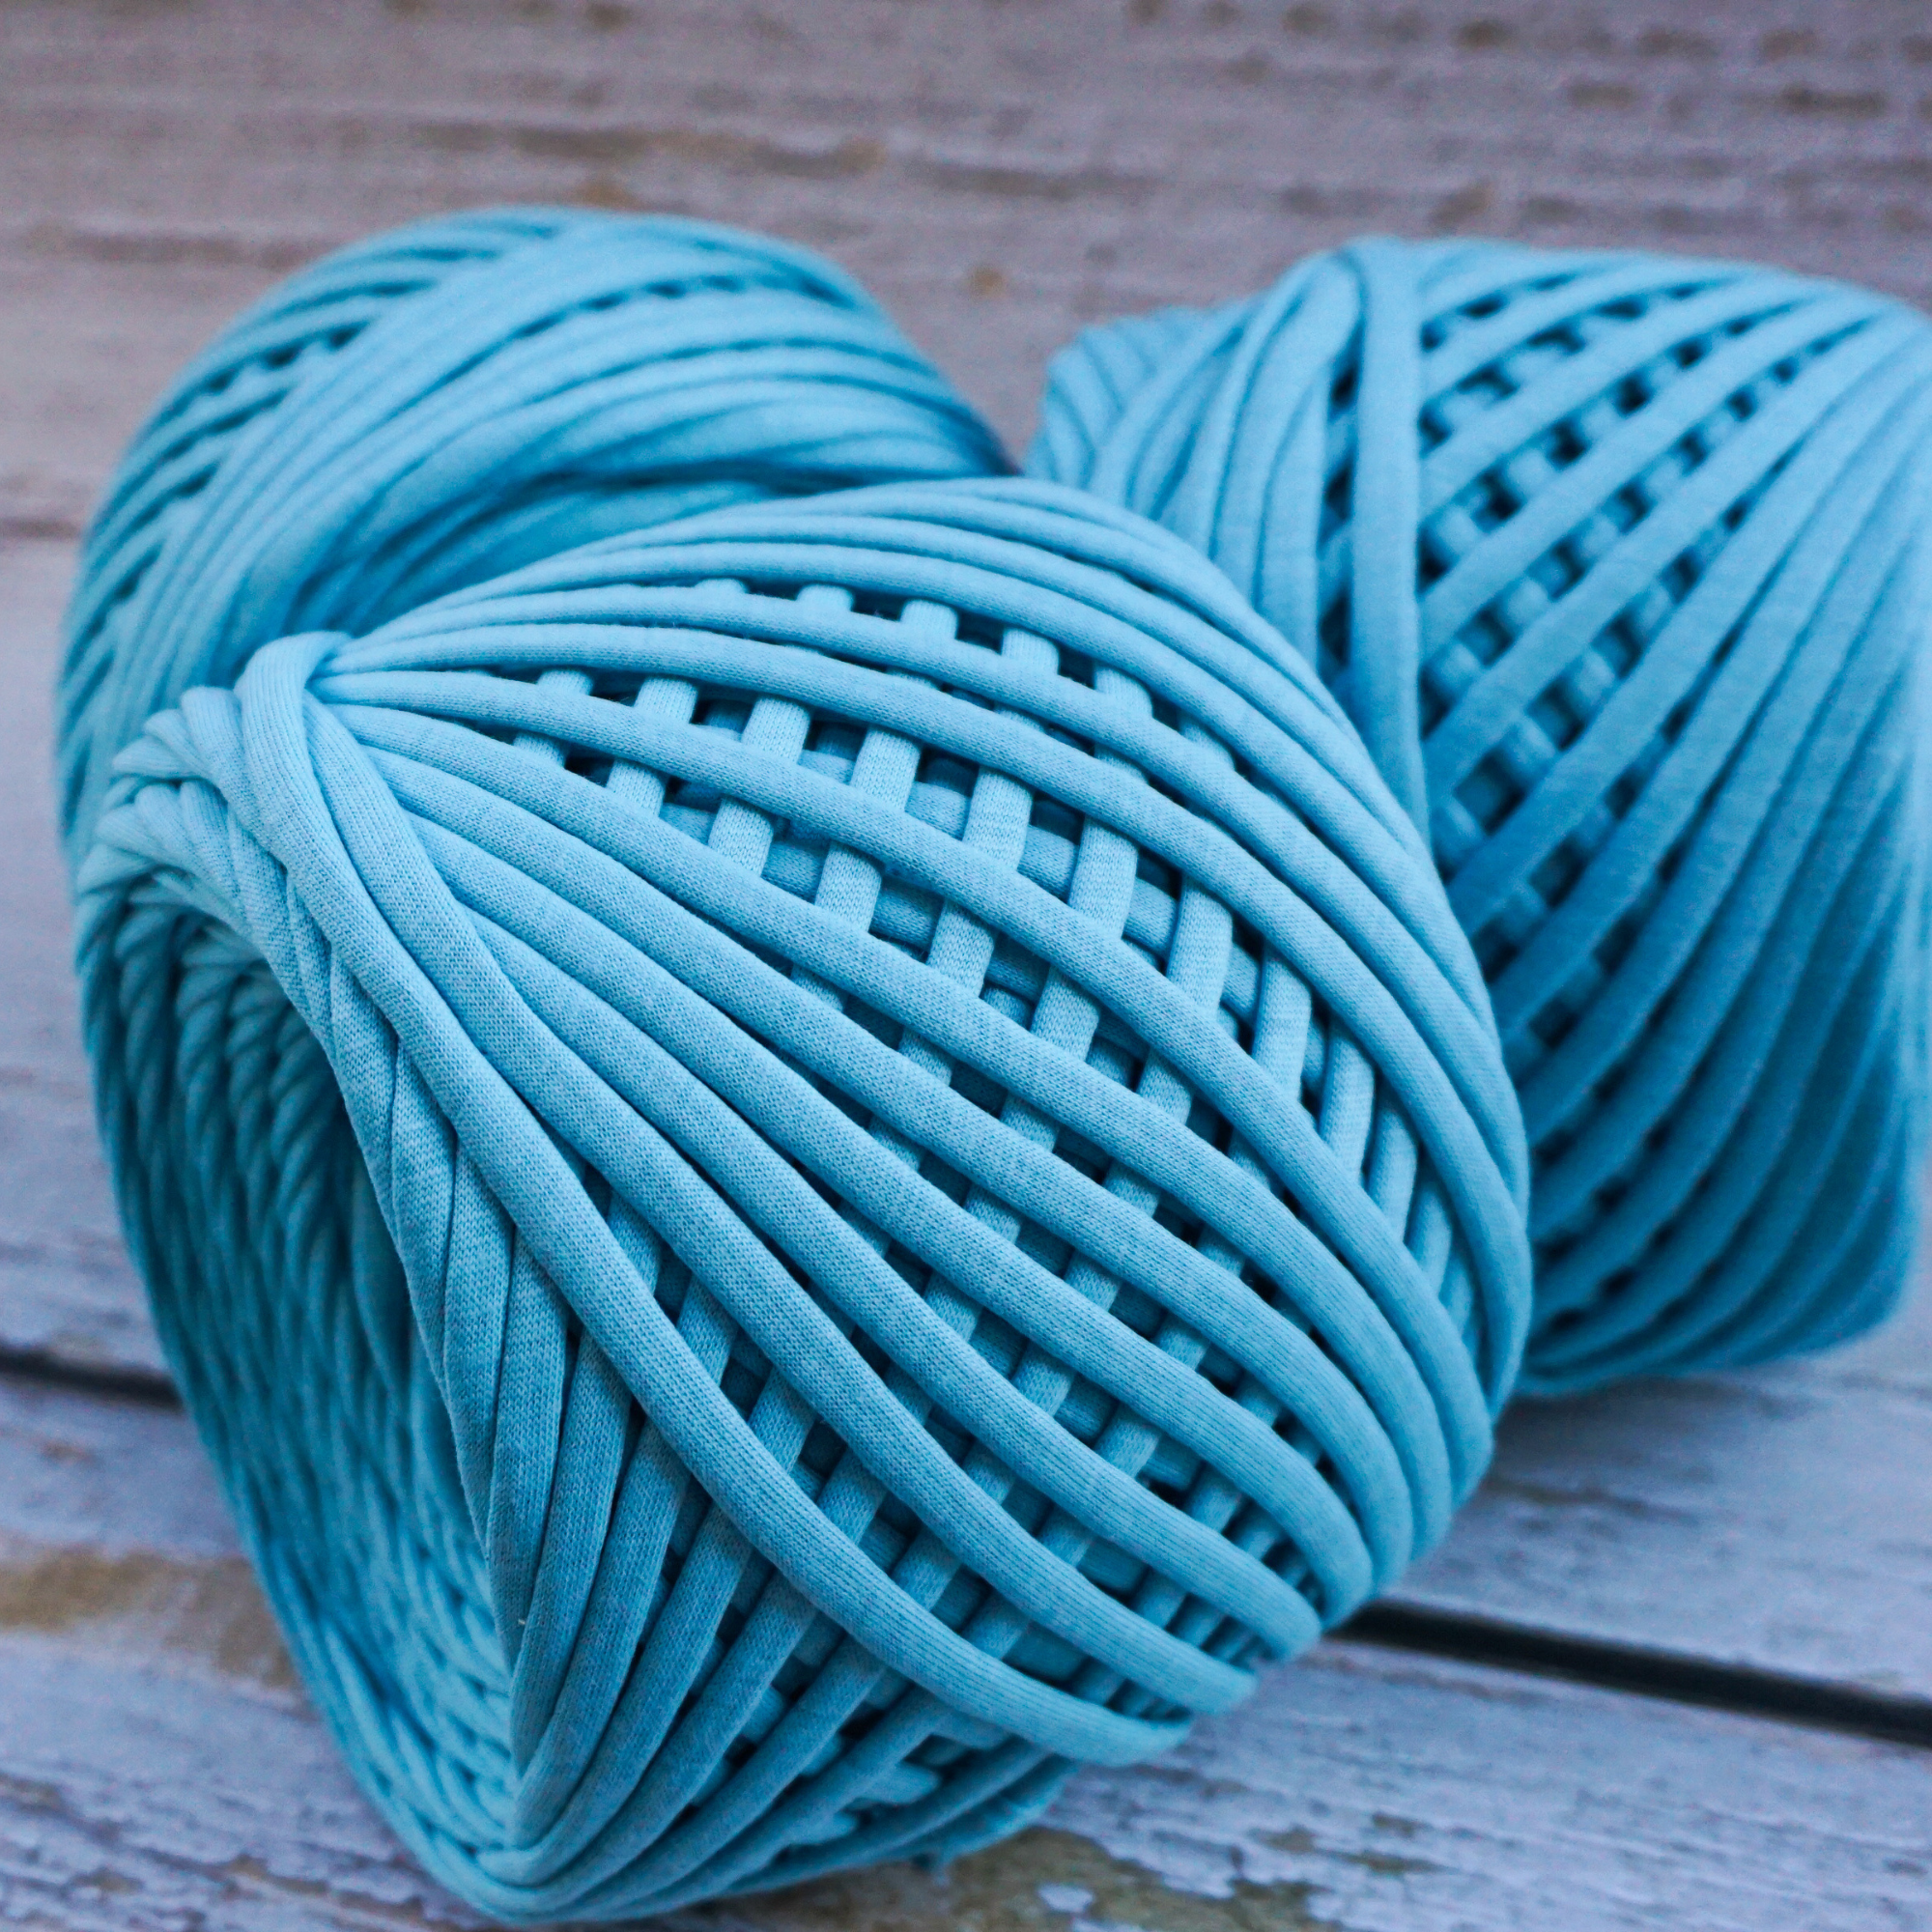 T-shirt yarn for crocheting baskets, bags, rugs and home decor. Royal –  Knitznpurlz